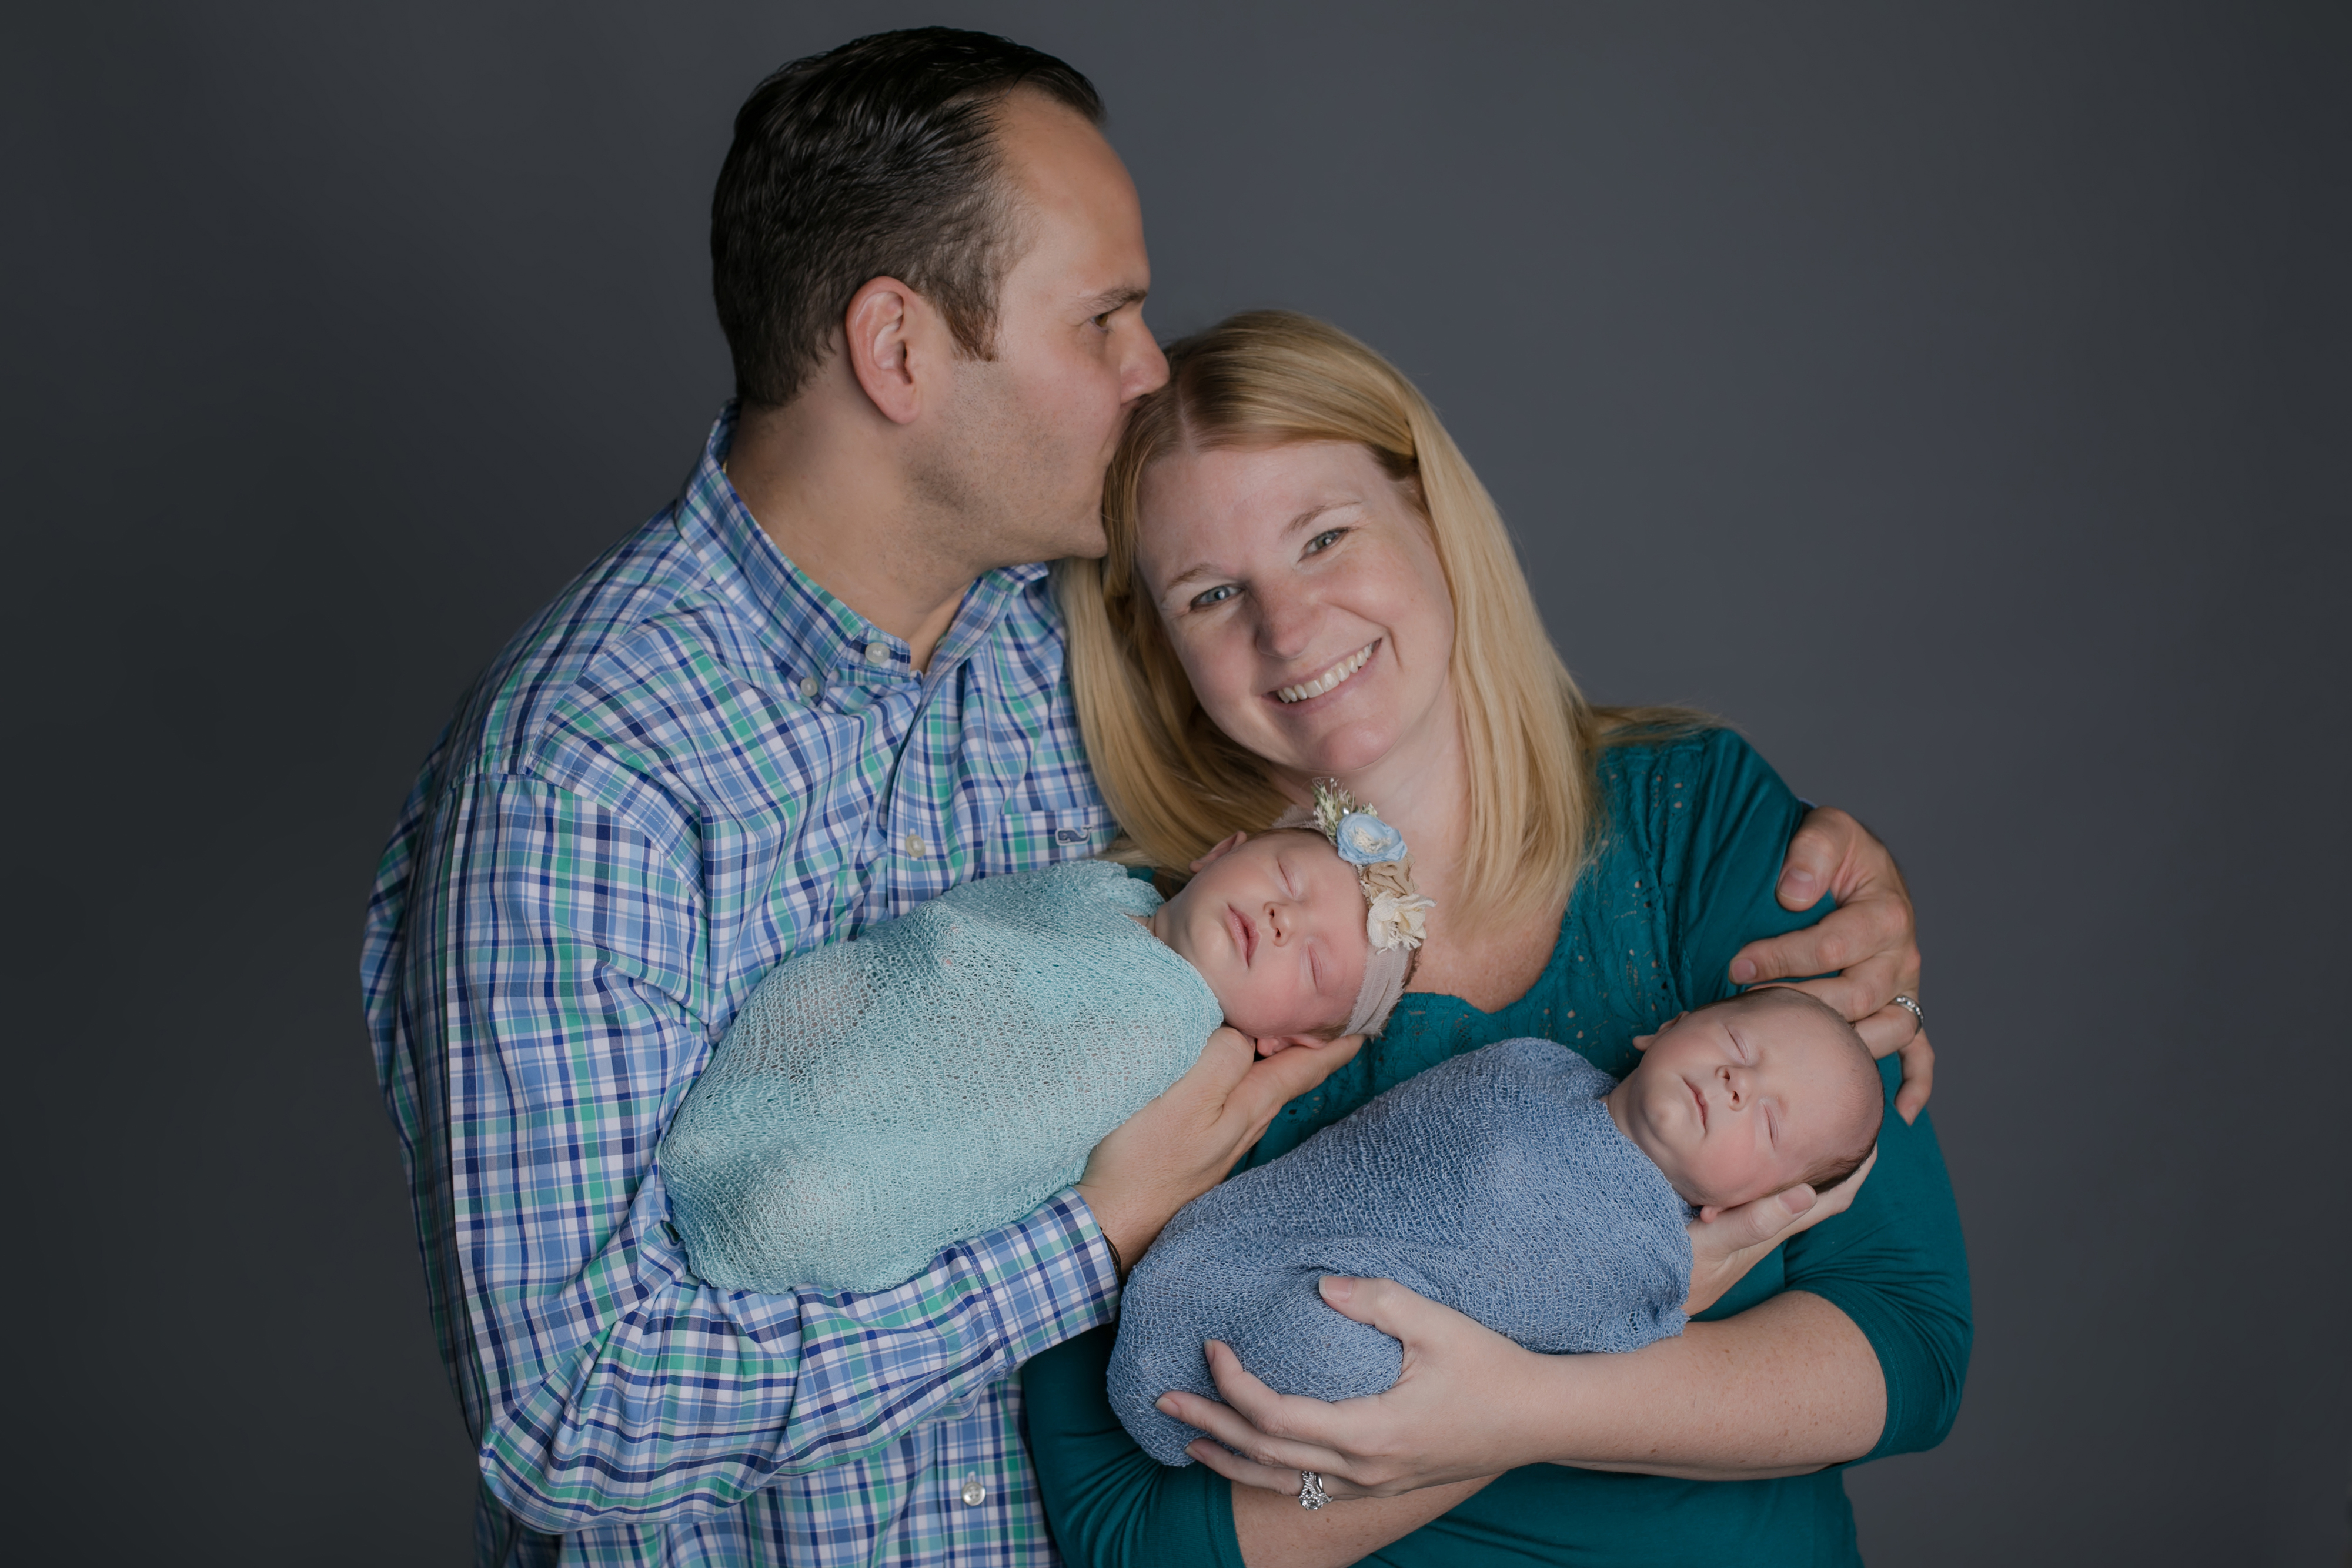 Photos with twin newborn babies